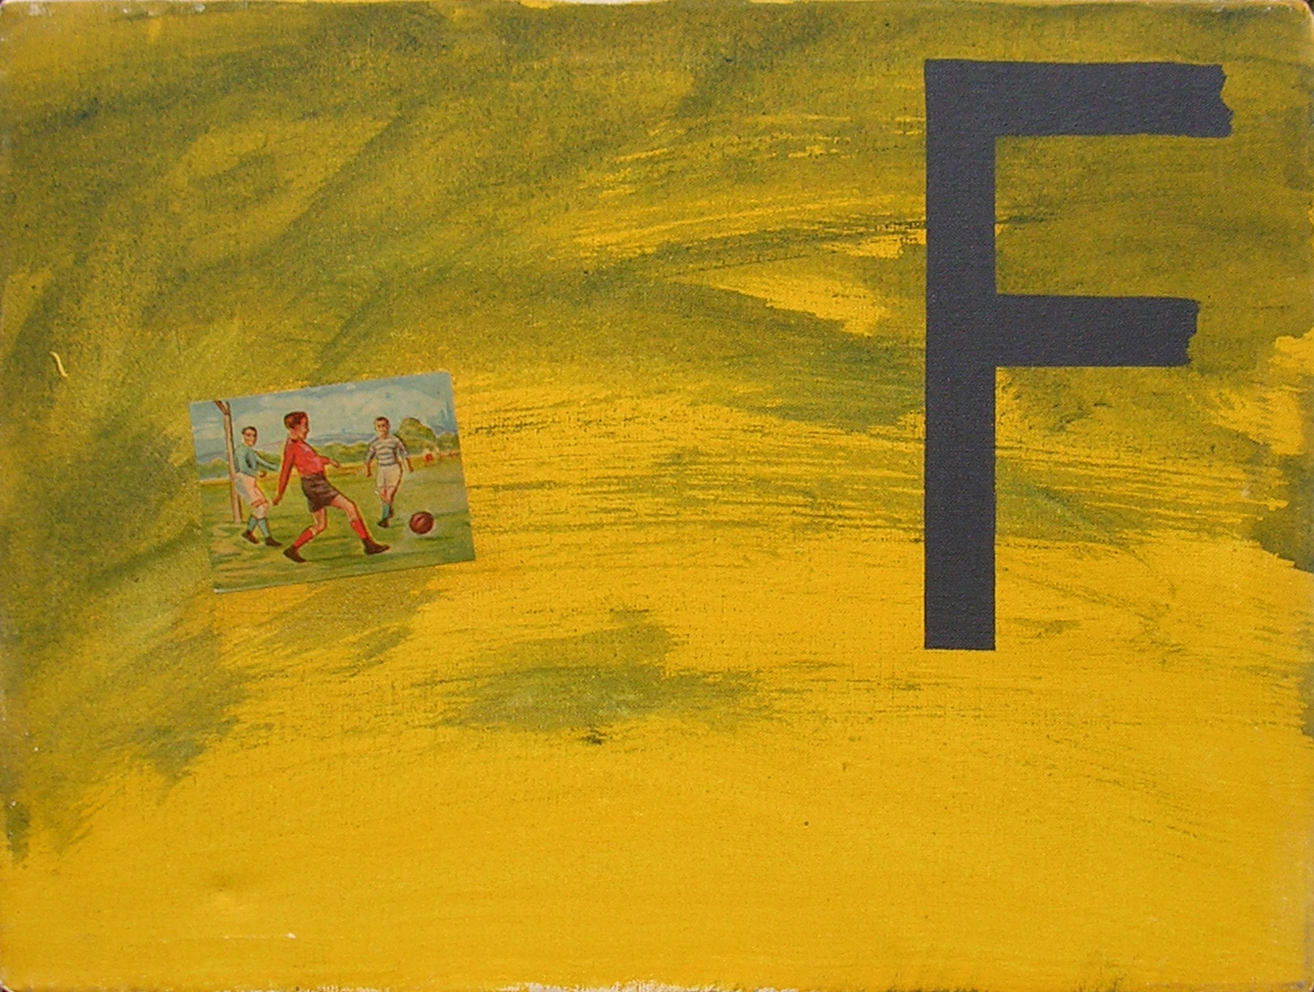 Abecedario F Fútbol; objetos ensamblados, tela, papel sobre bastidor, 30 cm x 40 cm, 2007